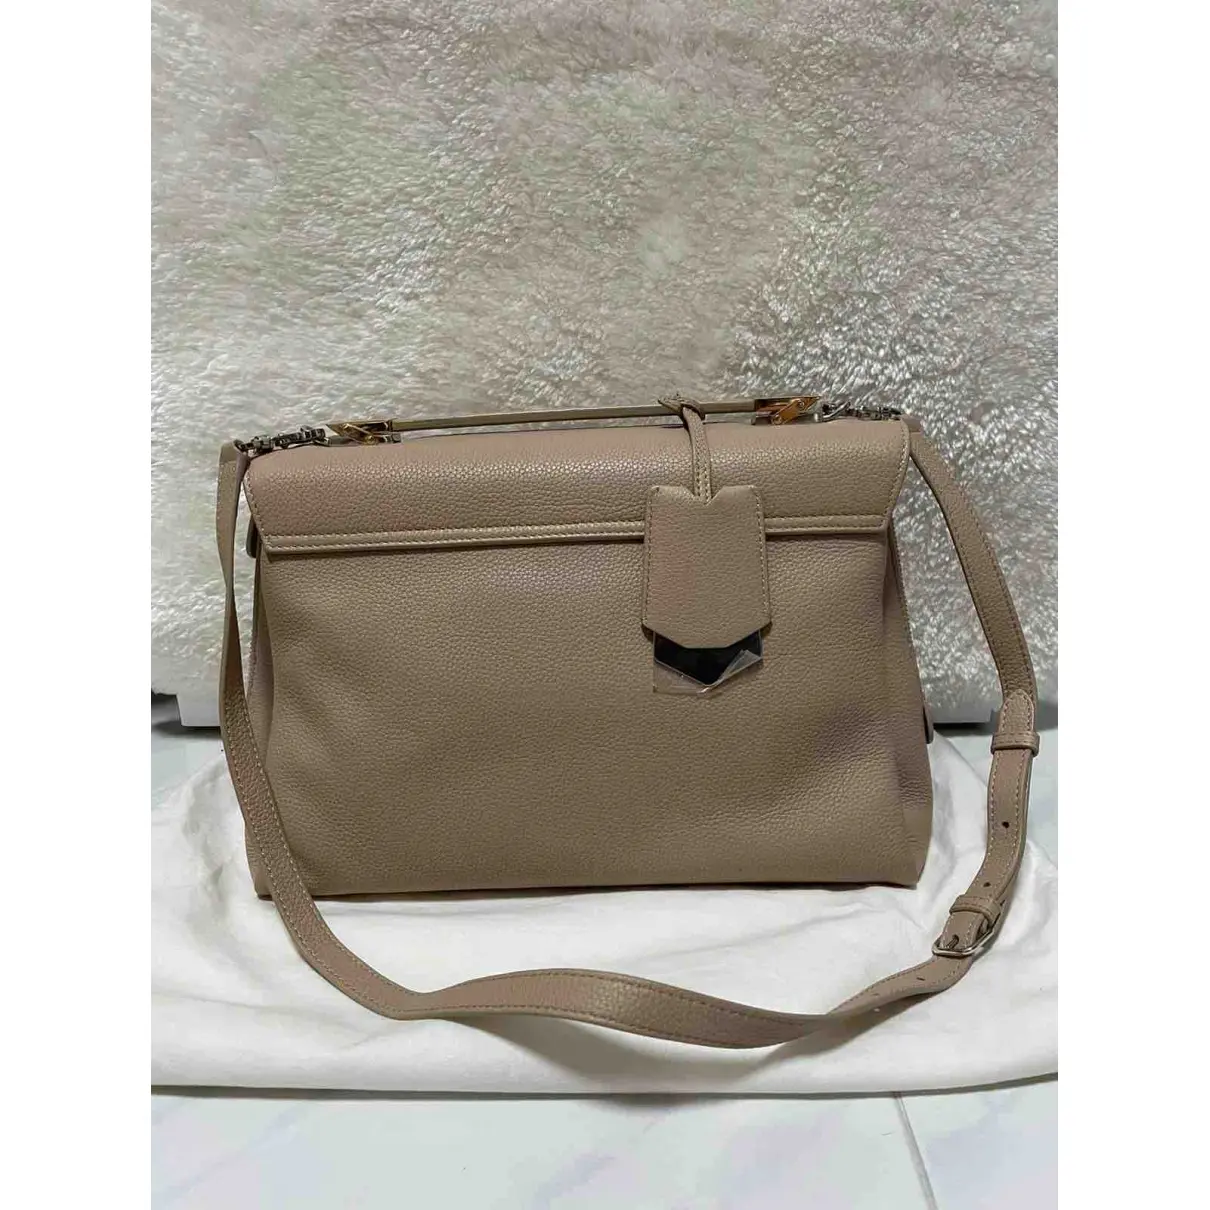 Buy Balenciaga Le Dix leather handbag online